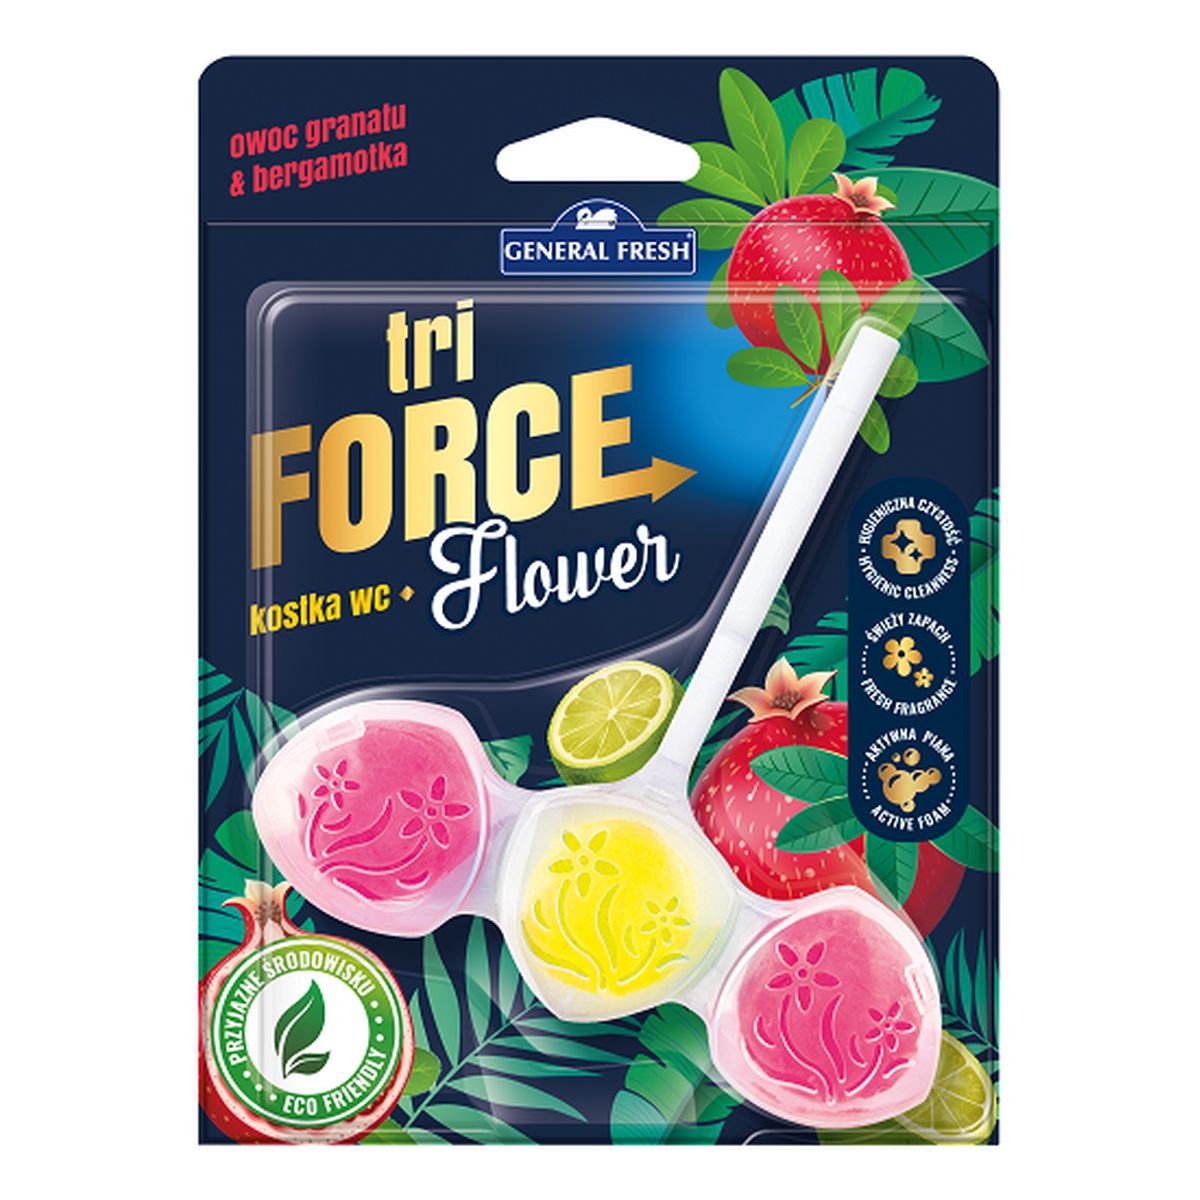 General Fresh Tri Force WC kostka Flower Owoc Granatu & Bergamotka 45g